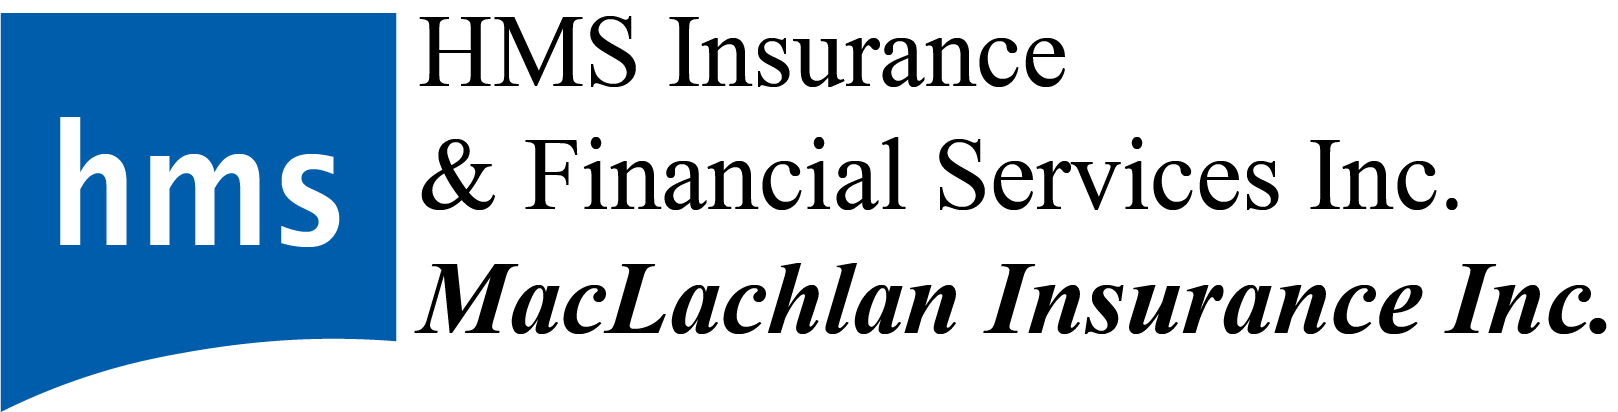 HMS/MacLachlan Insurance